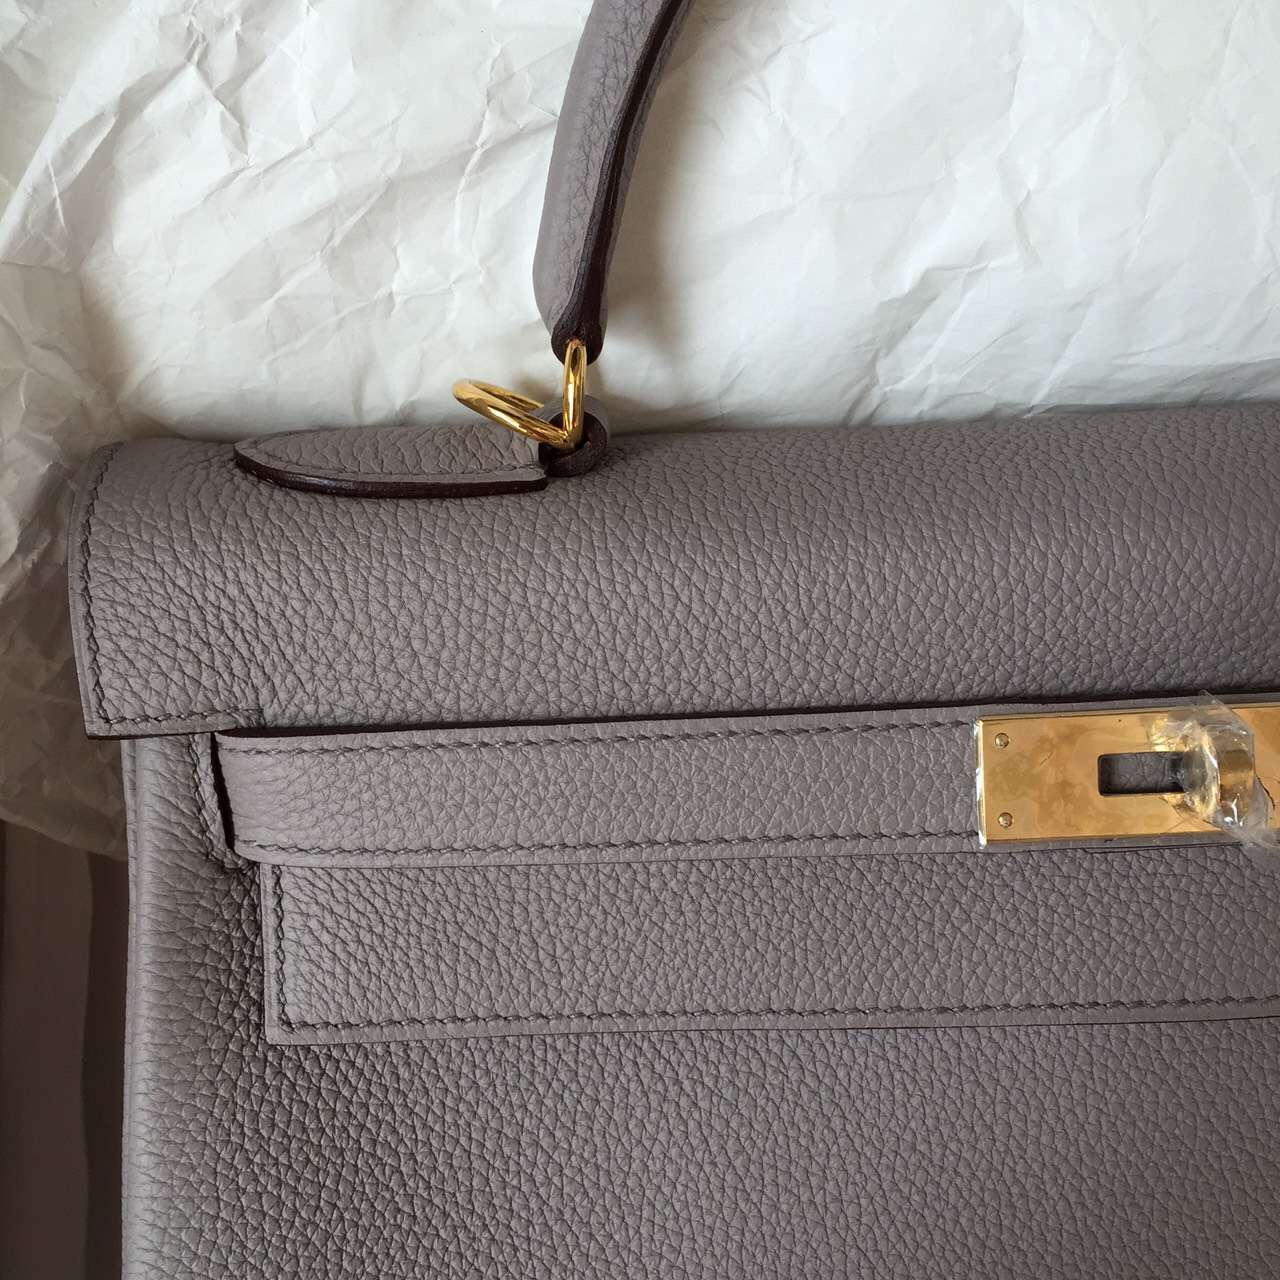 Wholesale 32CM Hermes Kelly Bag in Light Coffee Retourne Togo Leather New Handbag